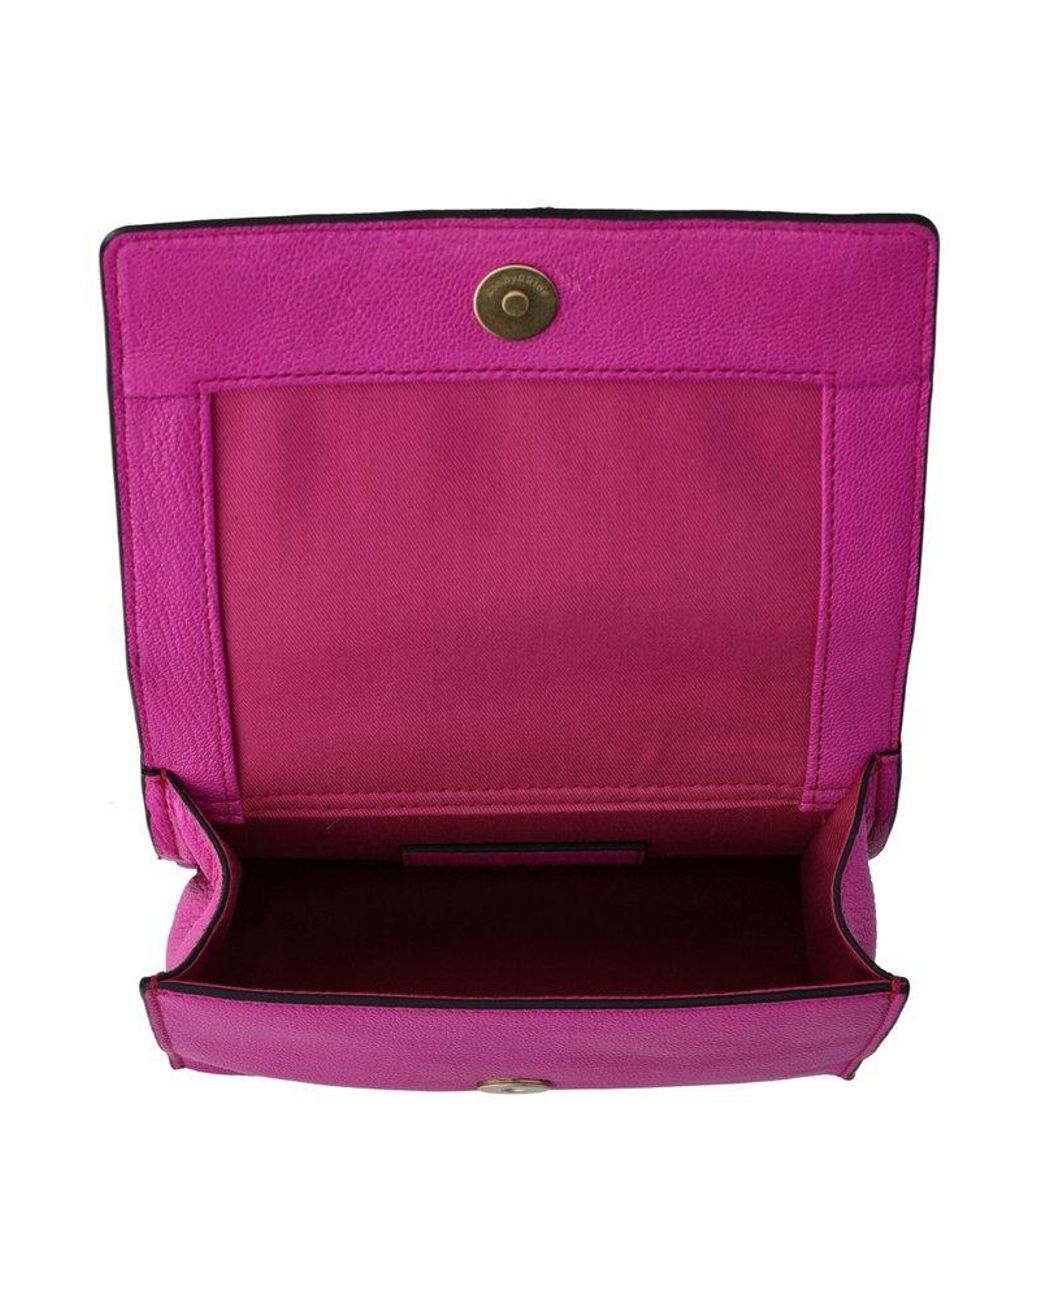 See by Chloe Hana Chain Bag (Sunset Pink) Handbags - ShopStyle